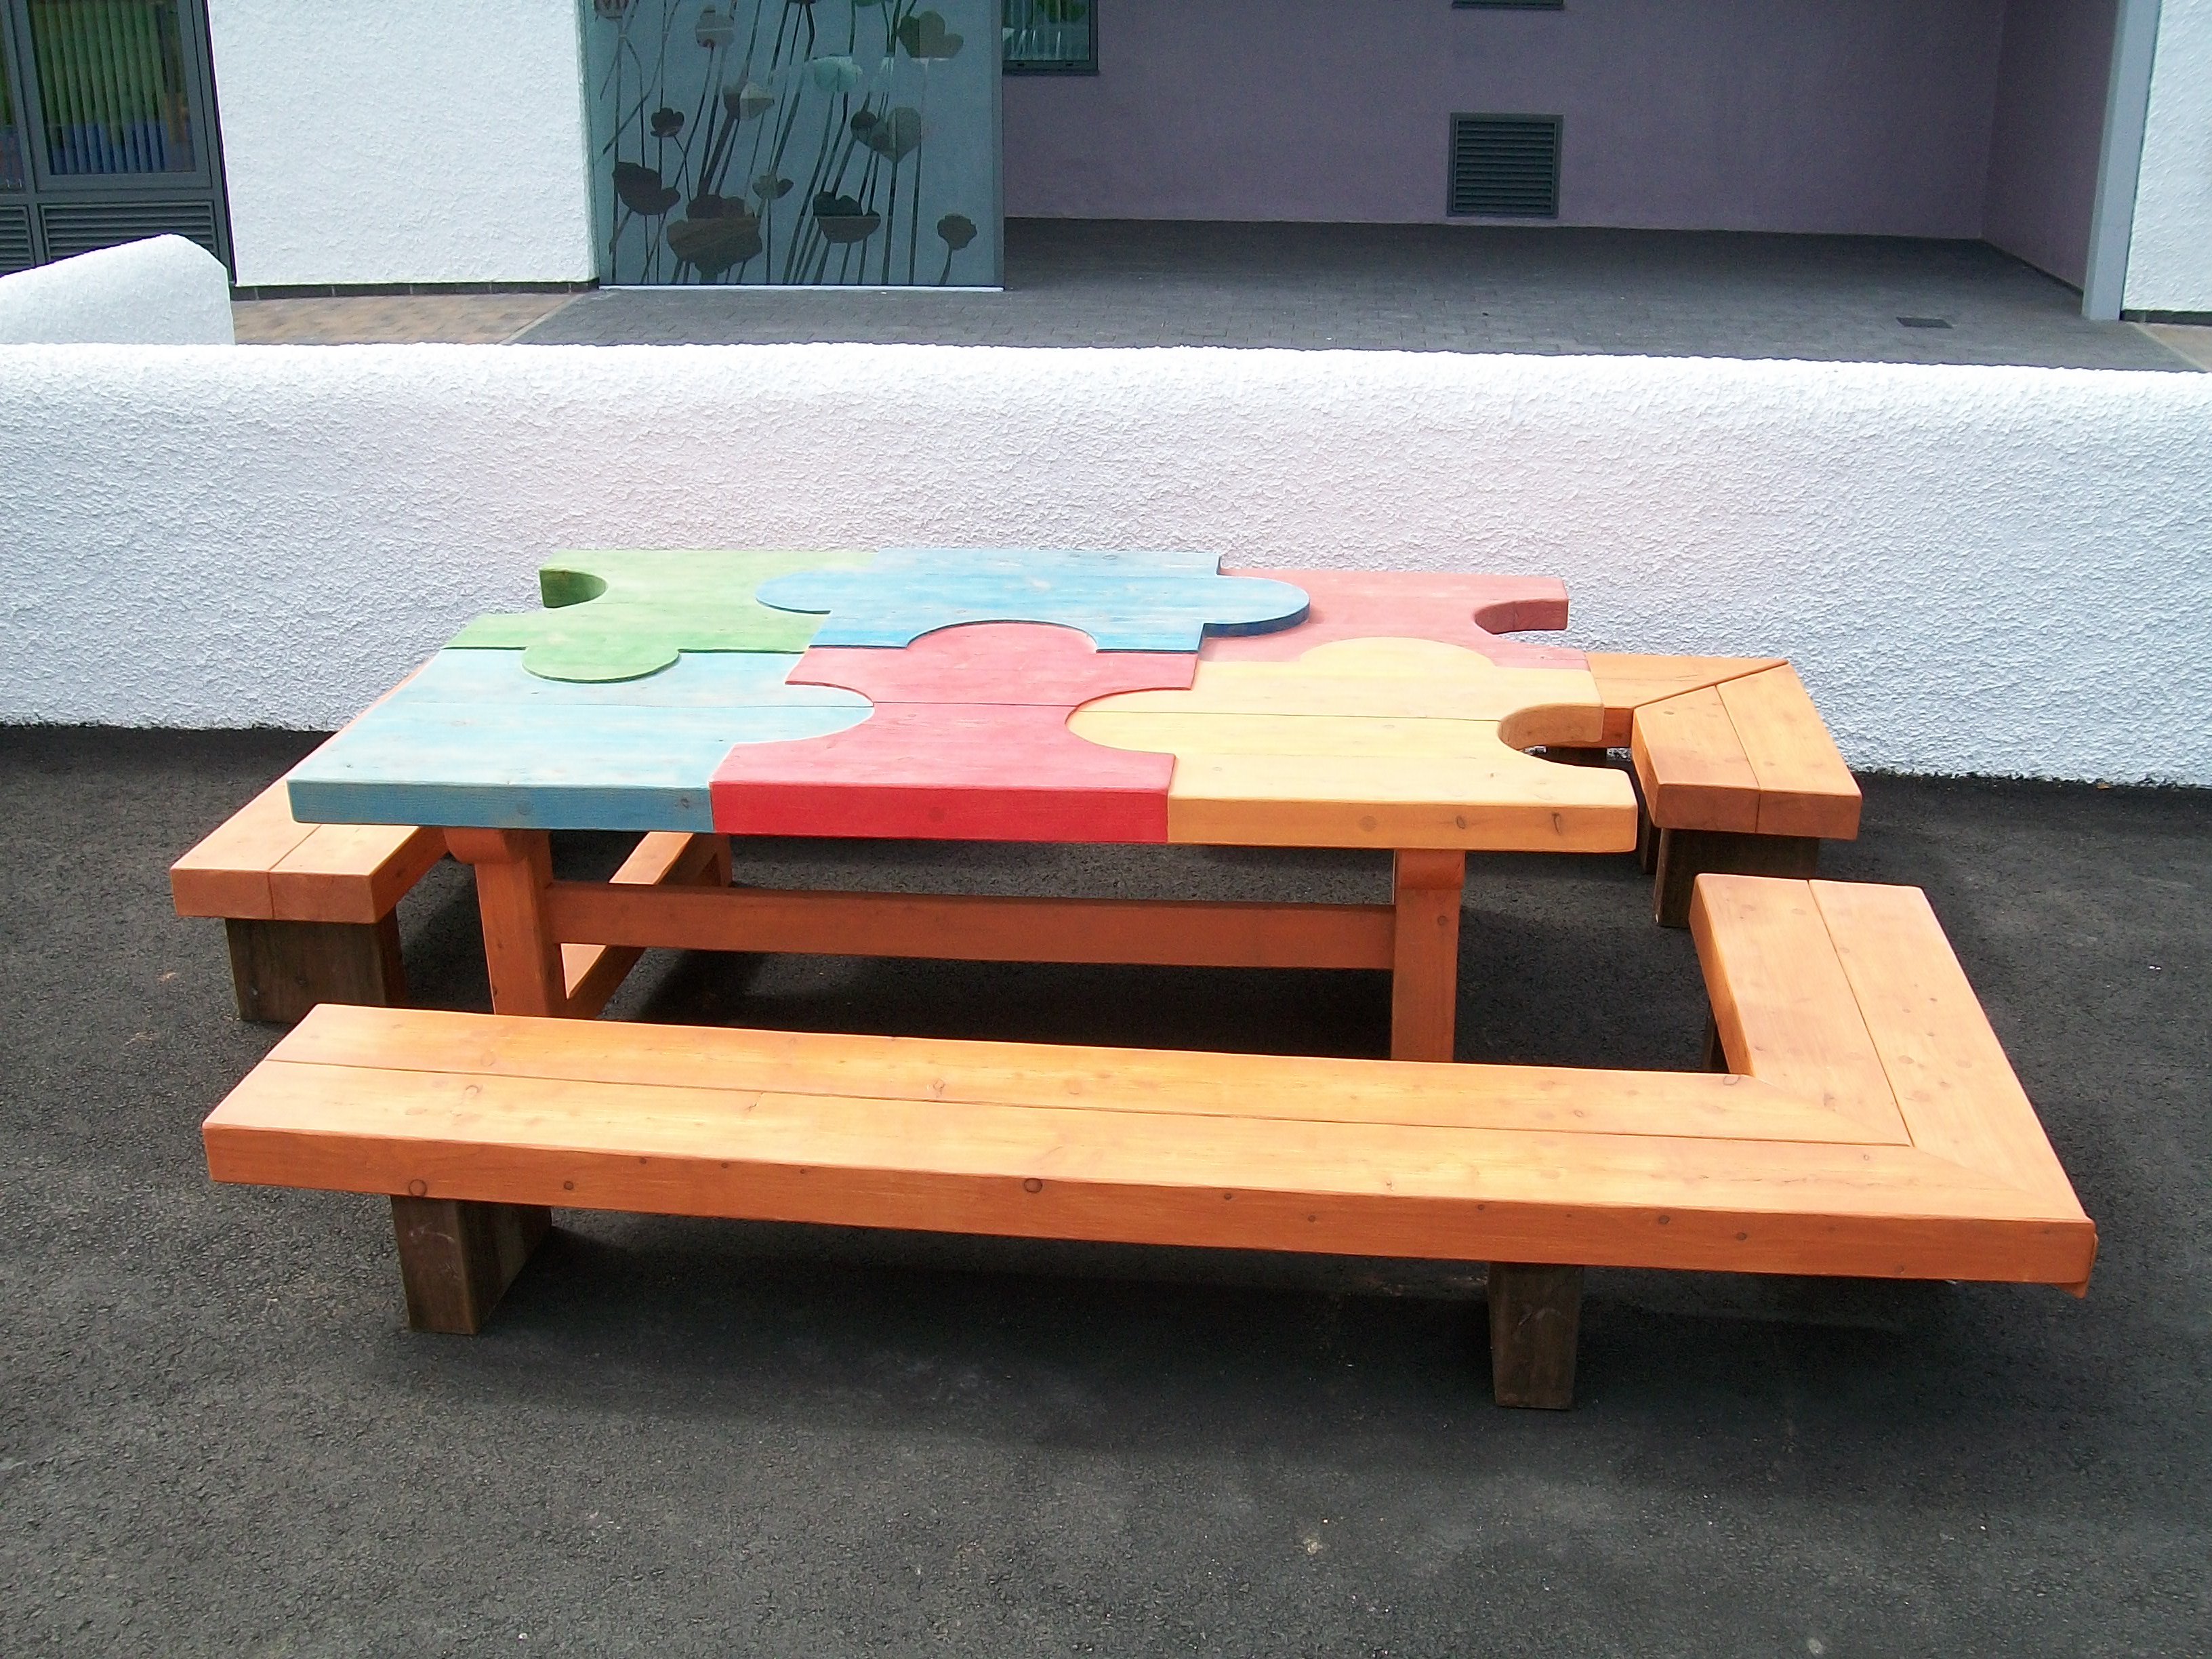 jigsaw table, friendship bench, Daliburgh school, gardens , garden furniture, sculpture, school playground, durable, outdoor furniture, bespoke, custom made,